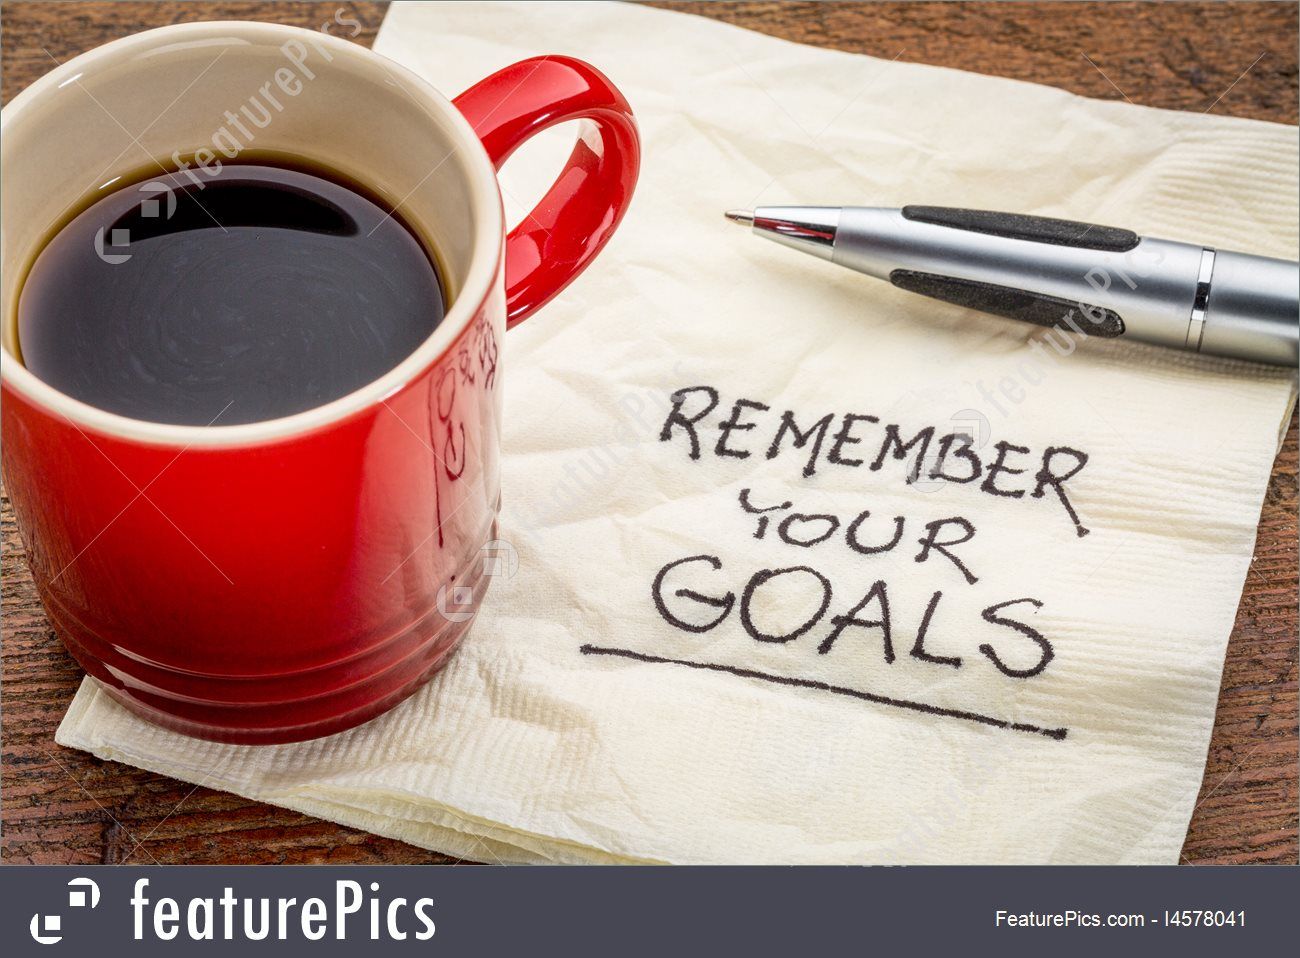 Remember your goals. Image: featurepics